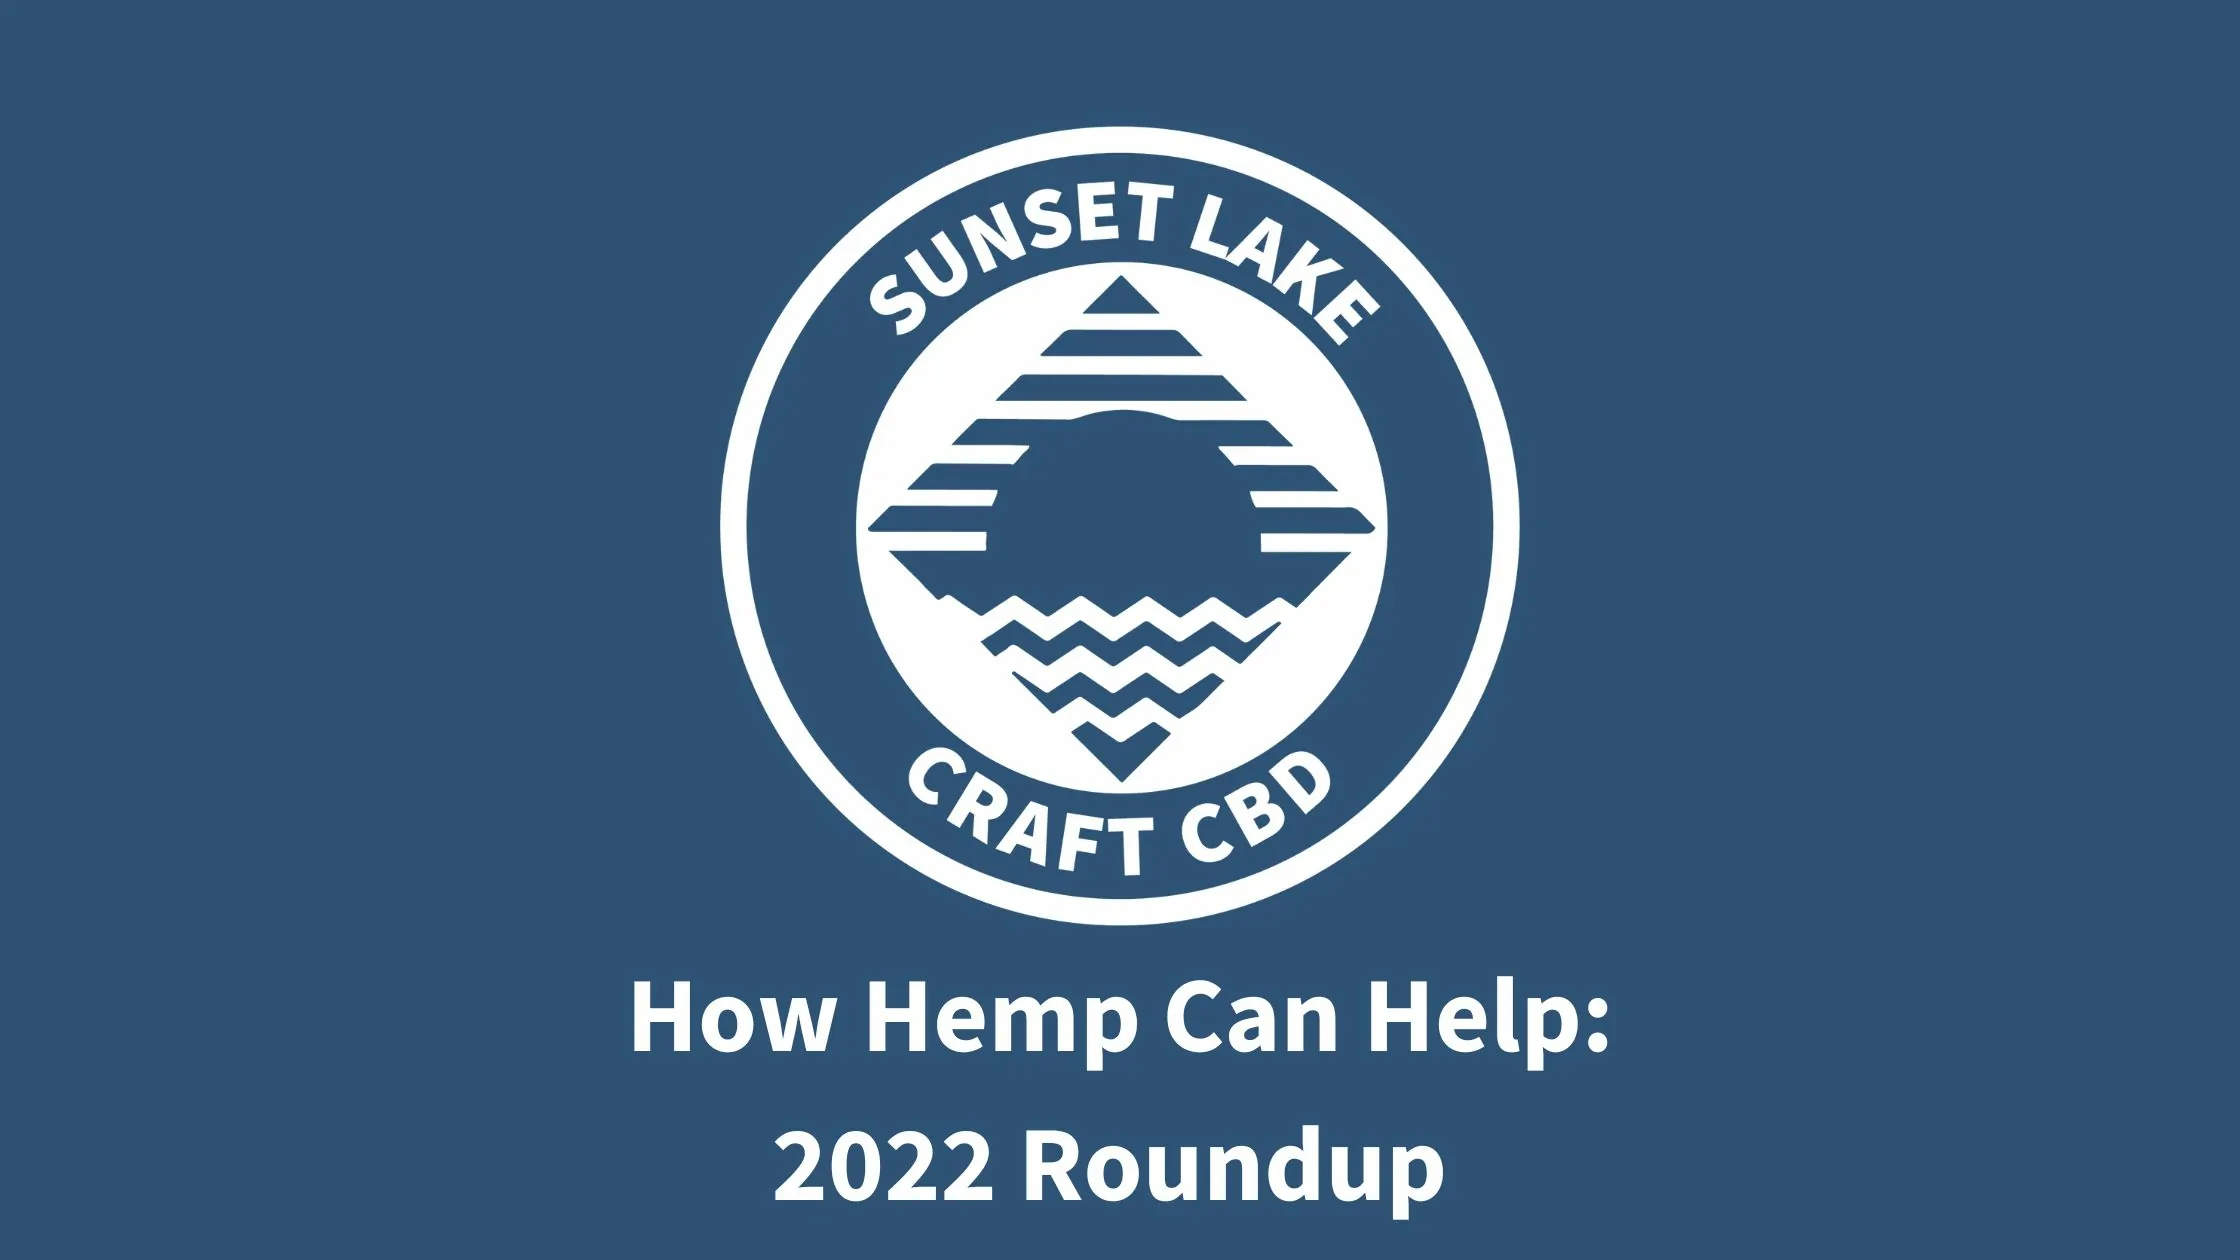 Sunset Lake CBD Logo on Blue. Text reads "How hemp can help, 2022 Roundup"